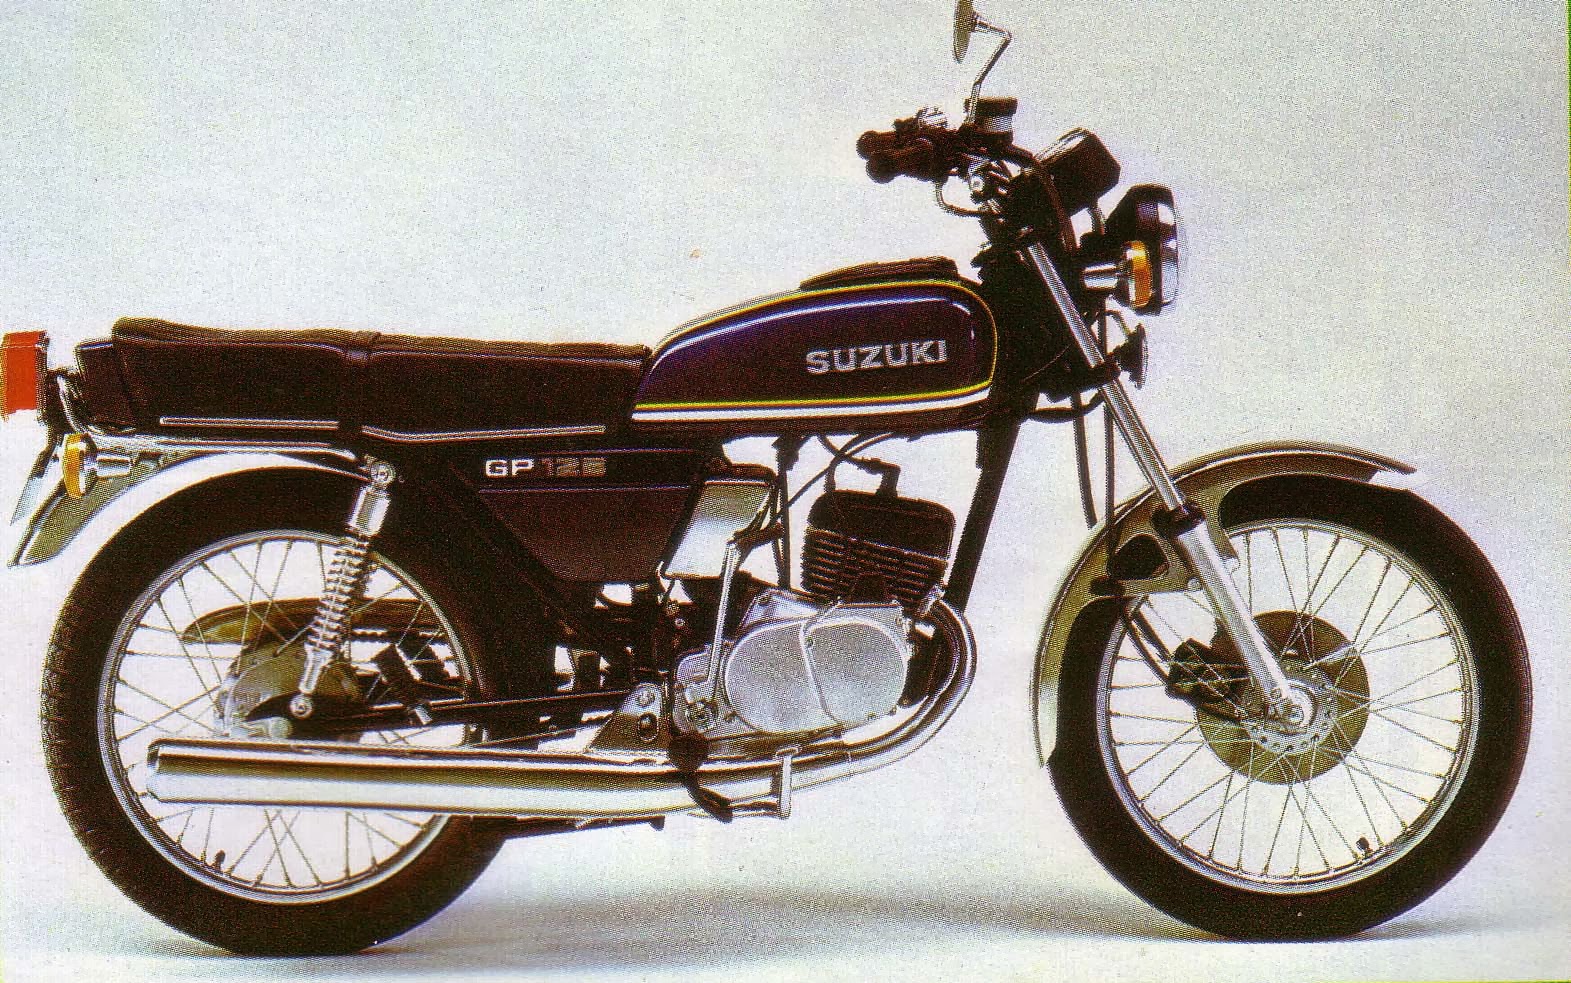  Motor  Suzuki  Trs 125 impremedia net